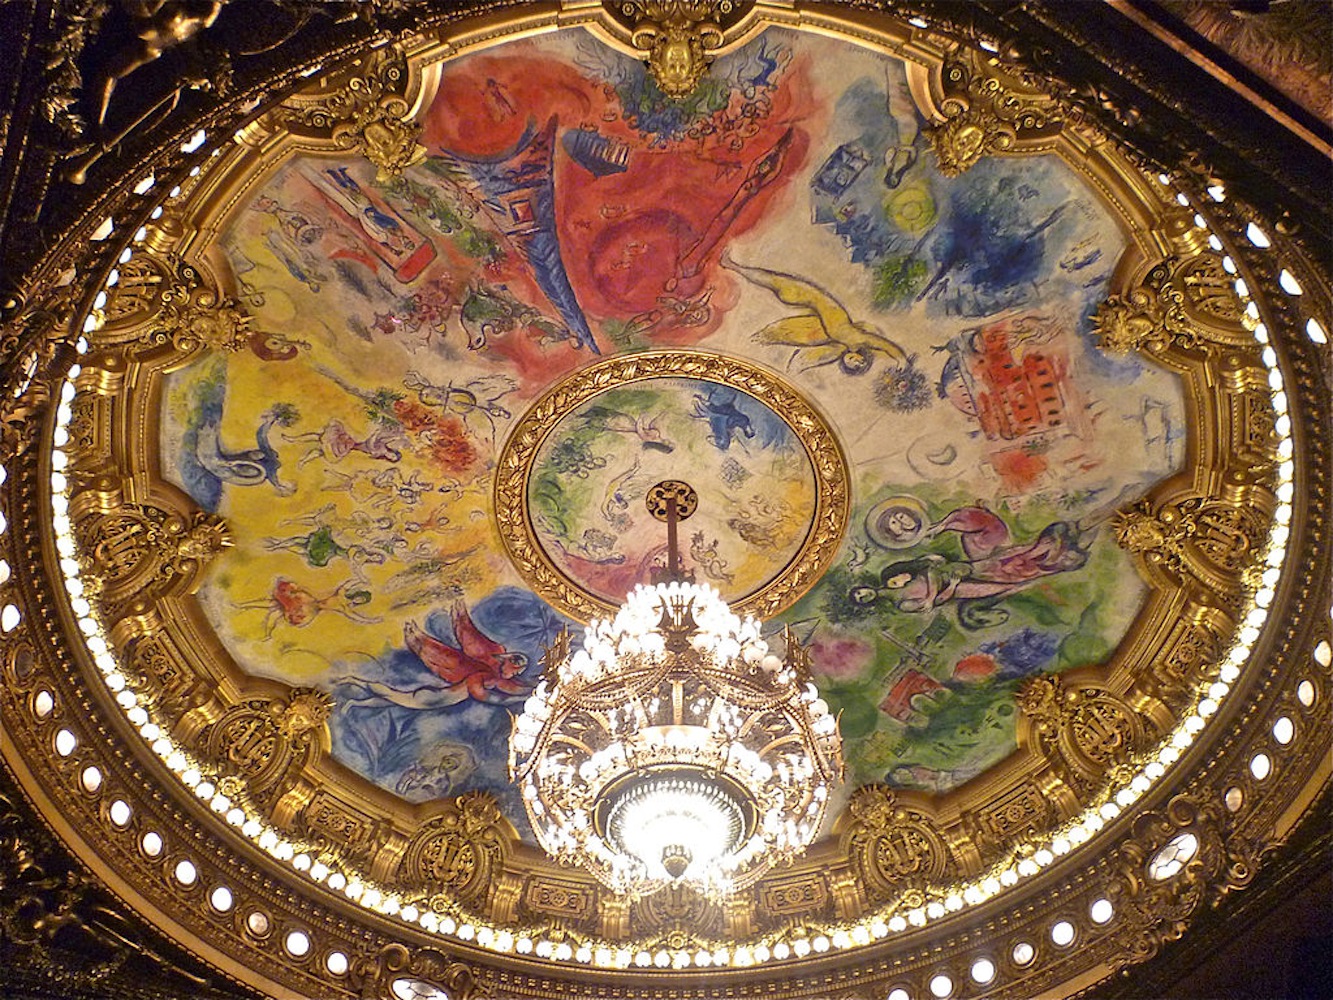 Paris Opera Ceiling Painting At Paintingvalley Com Explore